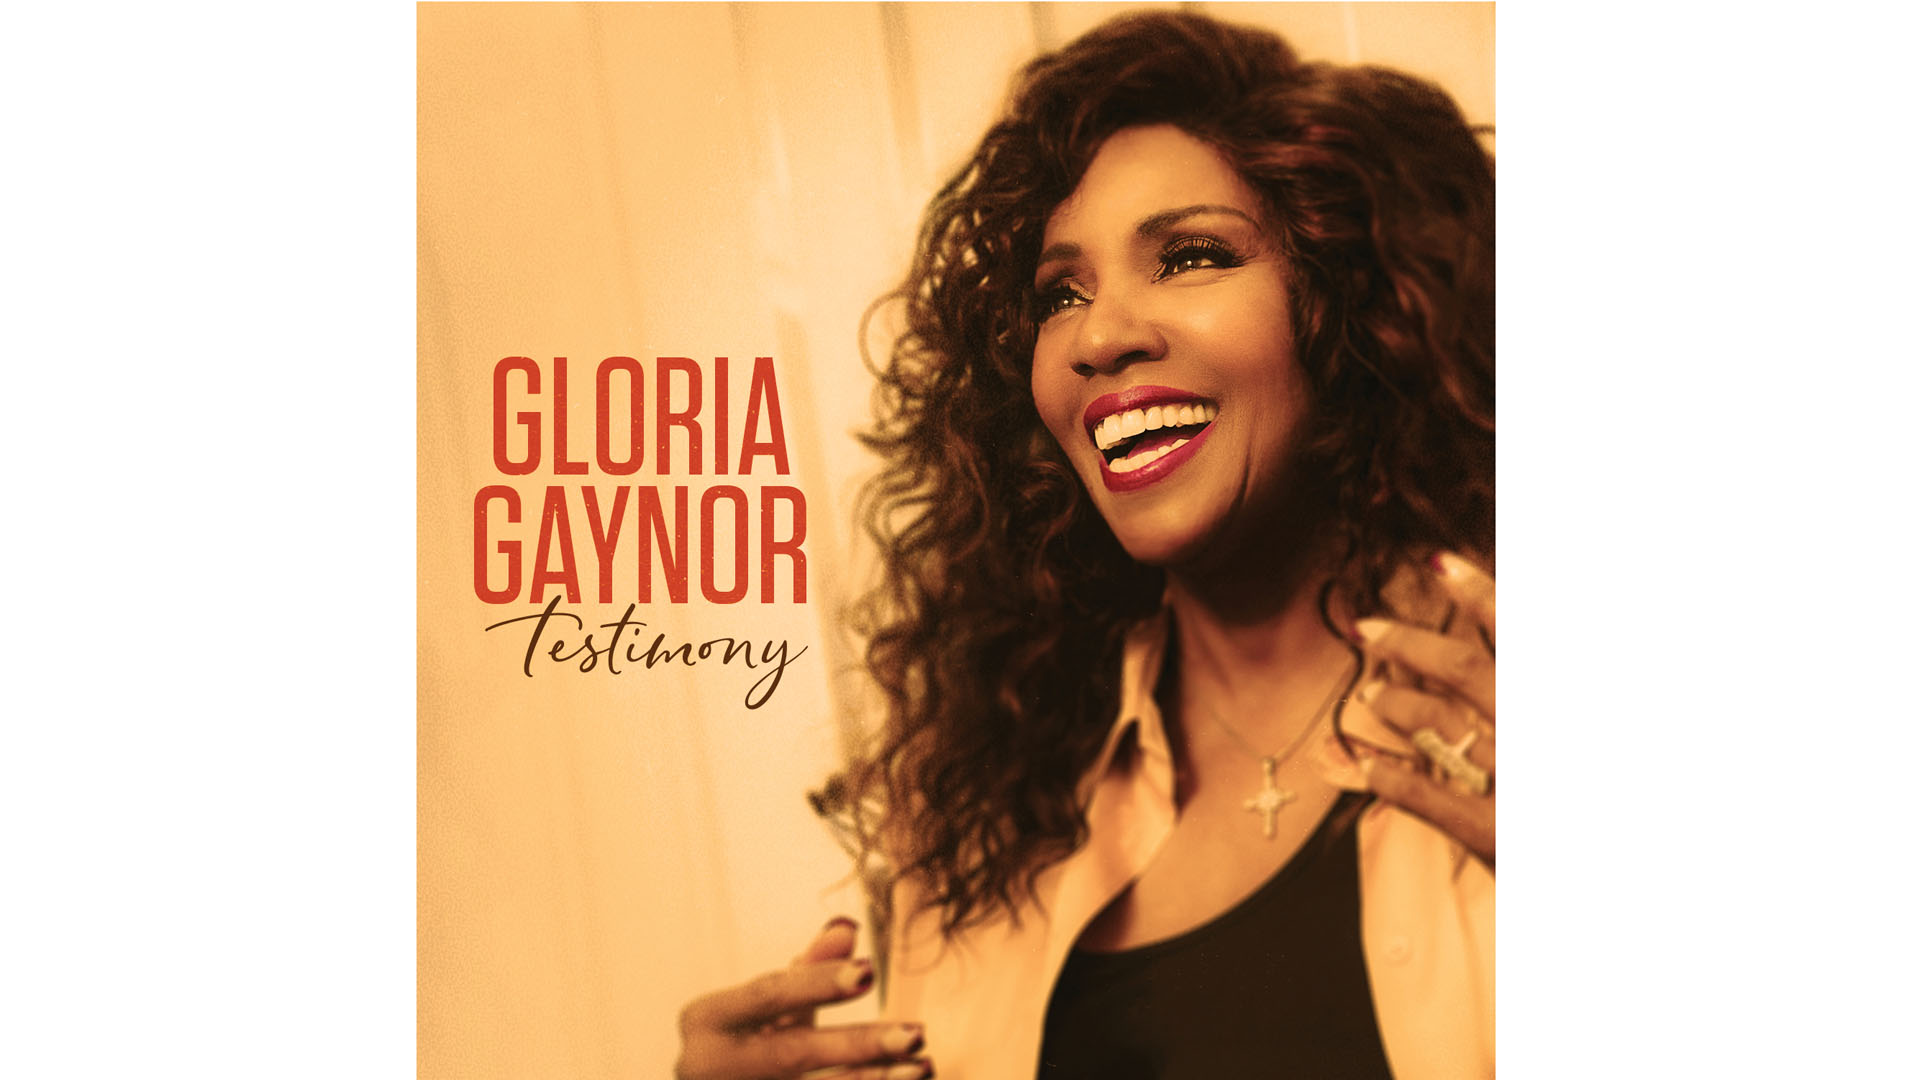 Gloria Gaynor: „Testimony“, Gaither Music Group via SCM Hänssler, 18,99 Euro, ASIN B07PKC8M1Z